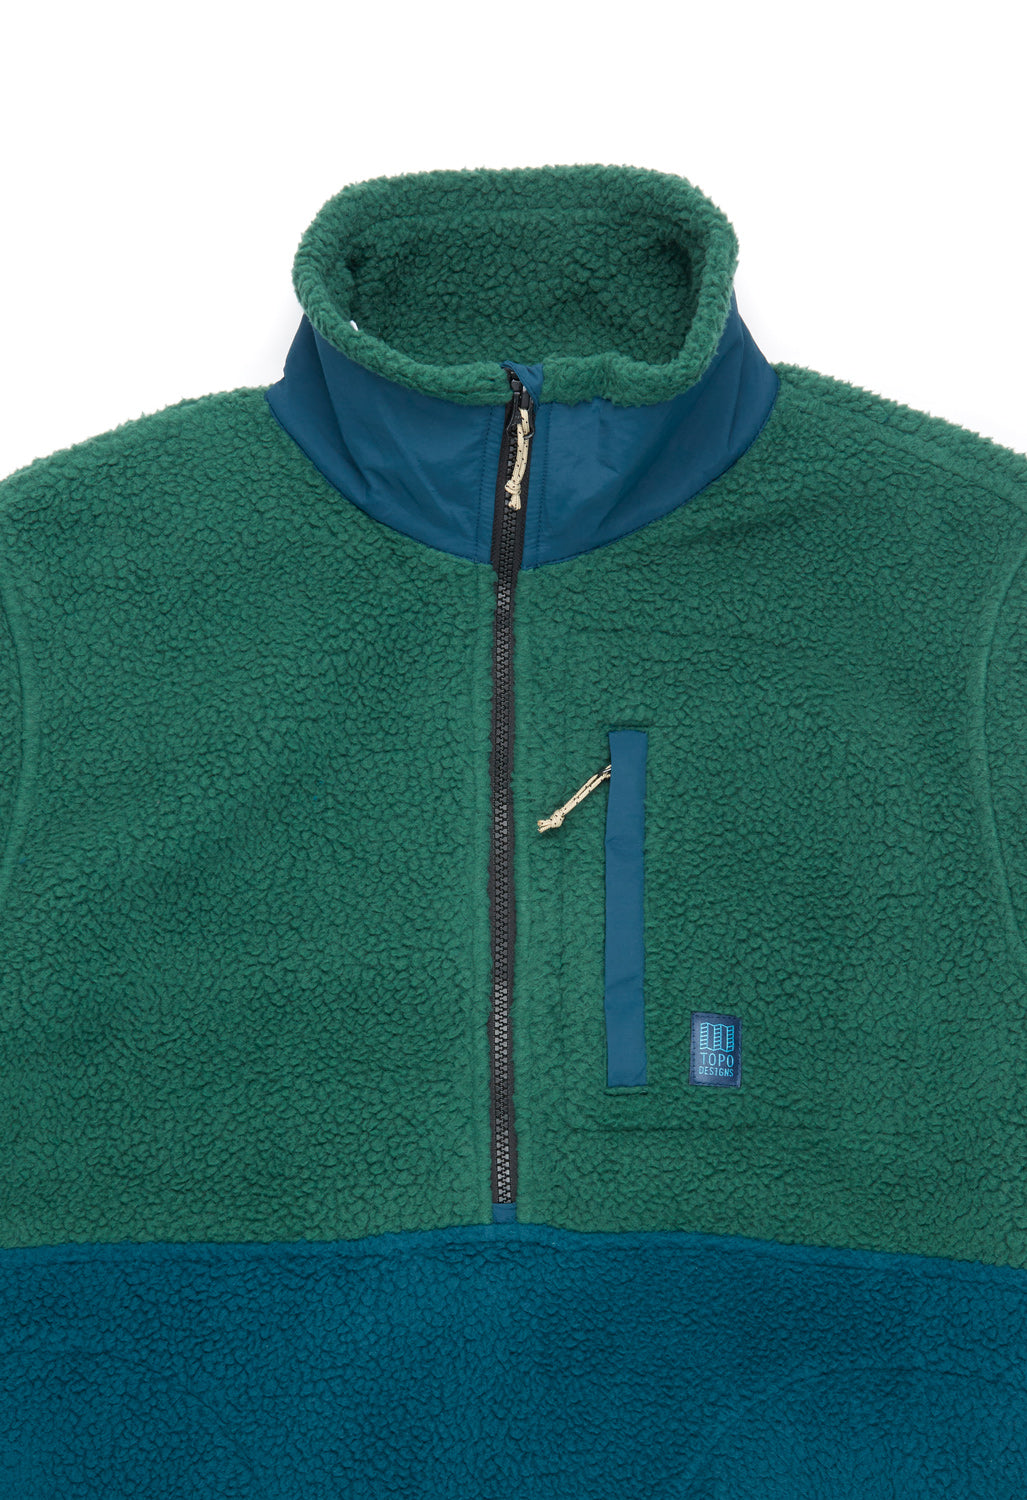 Topo Designs Men's Mountain Fleece Pullover - Forest / Pond Blue